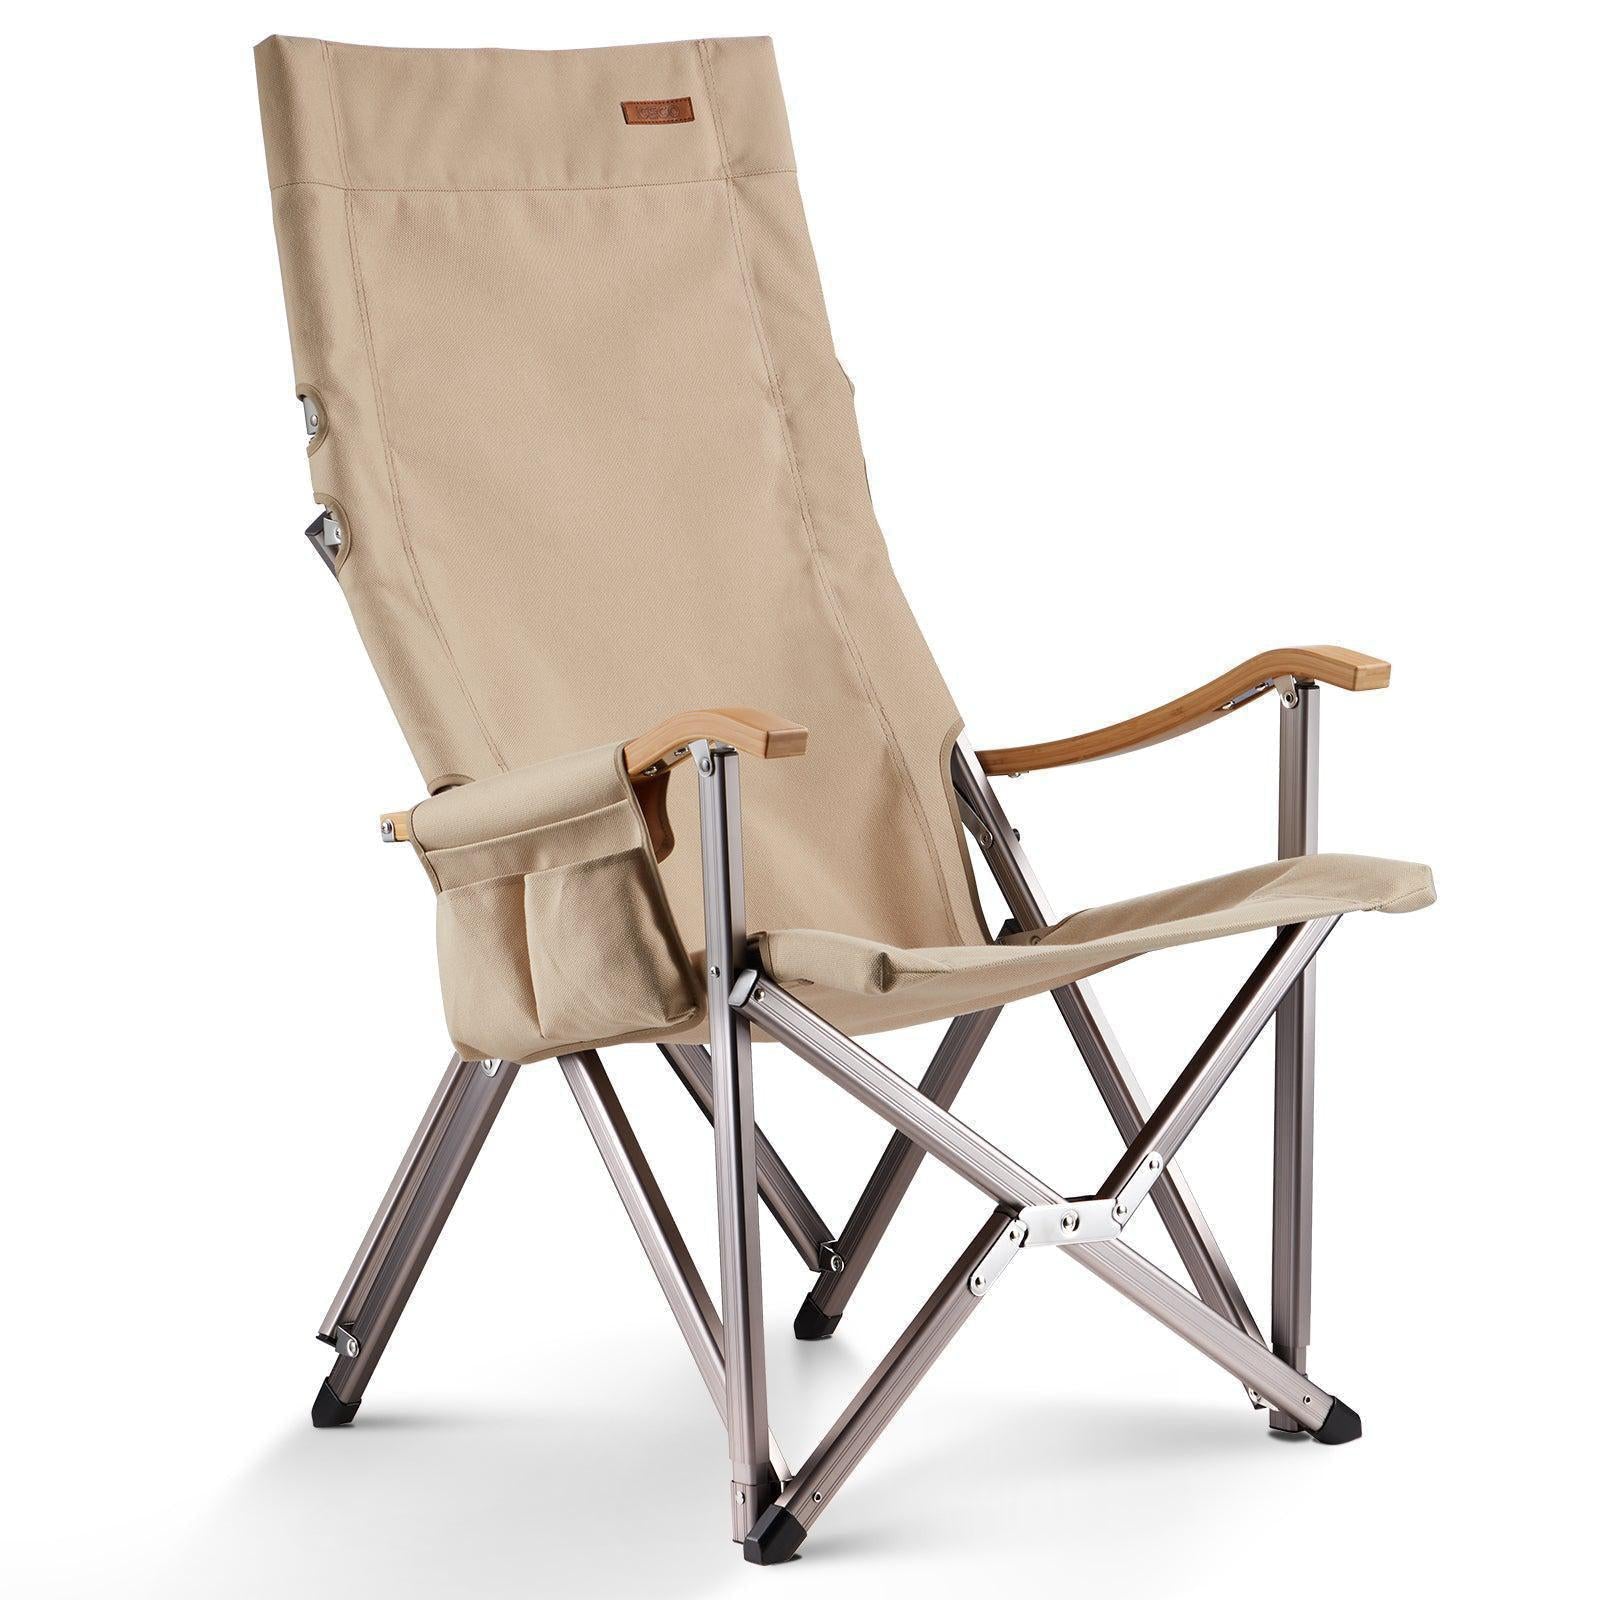 New! Hi1600 Folding Camping Chair